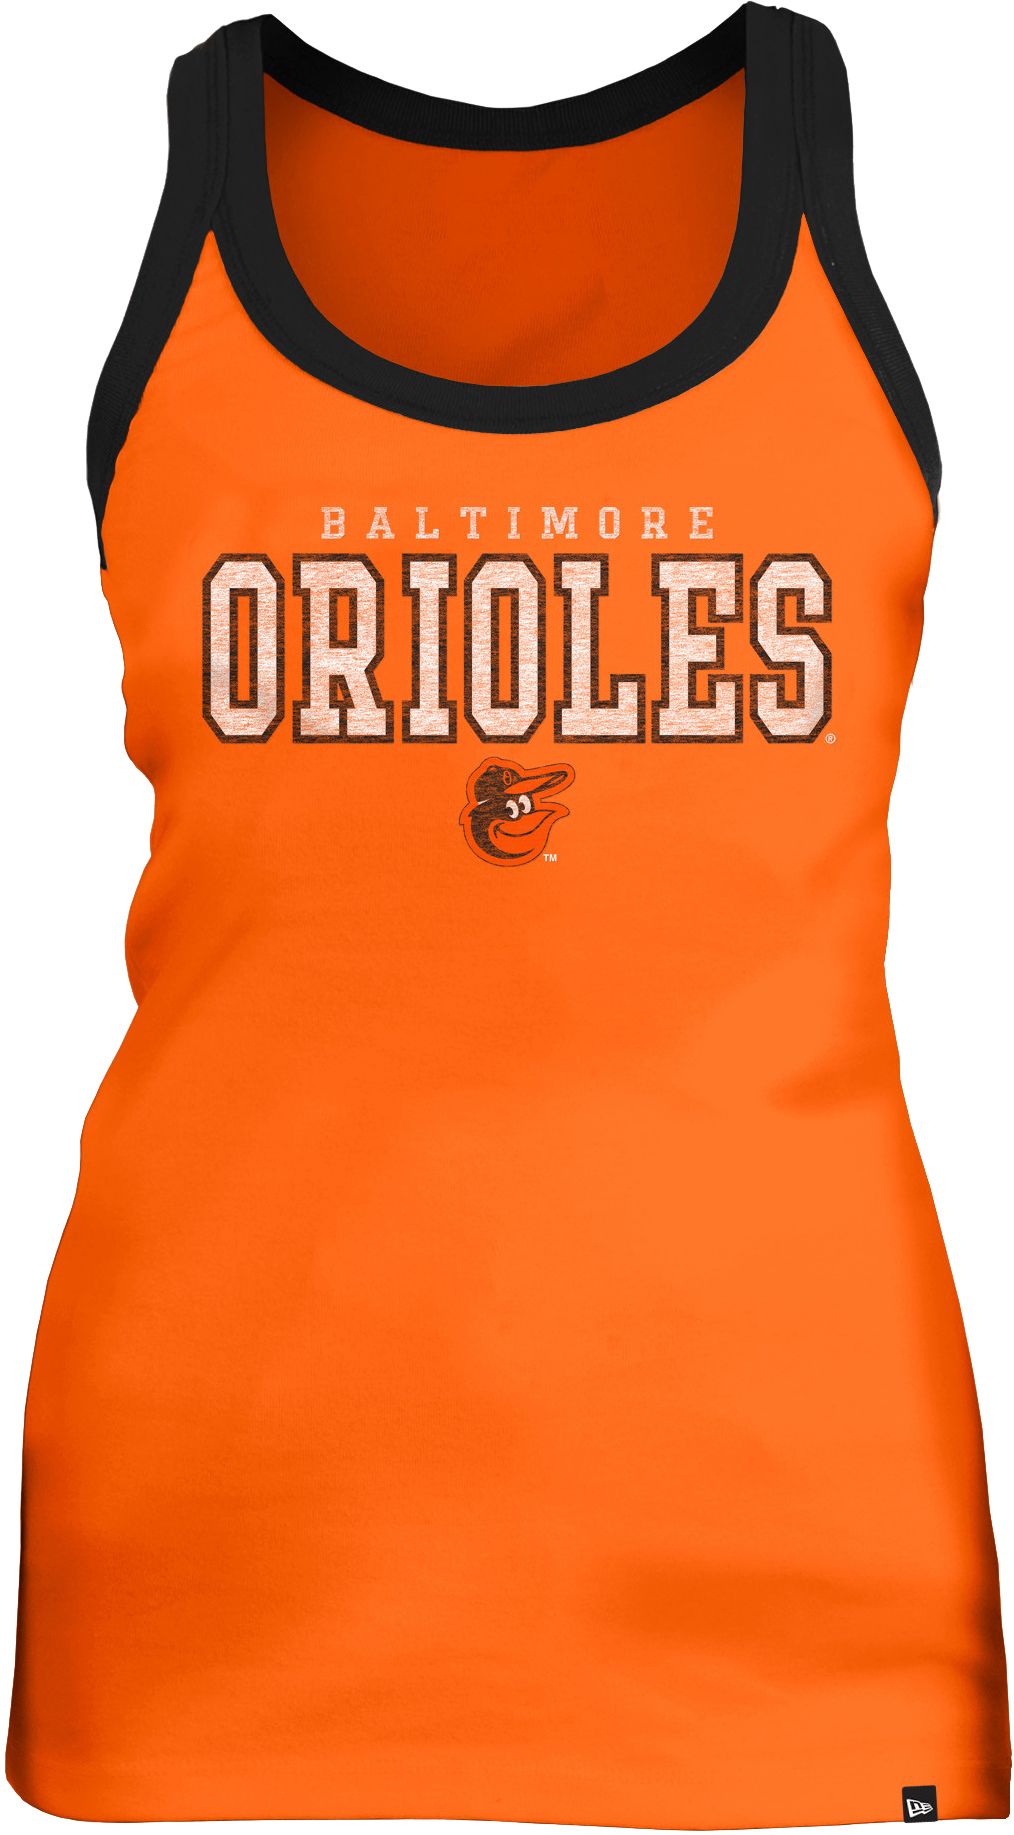 New Era / Women's Baltimore Orioles Orange Racerback Athletic Tank Top